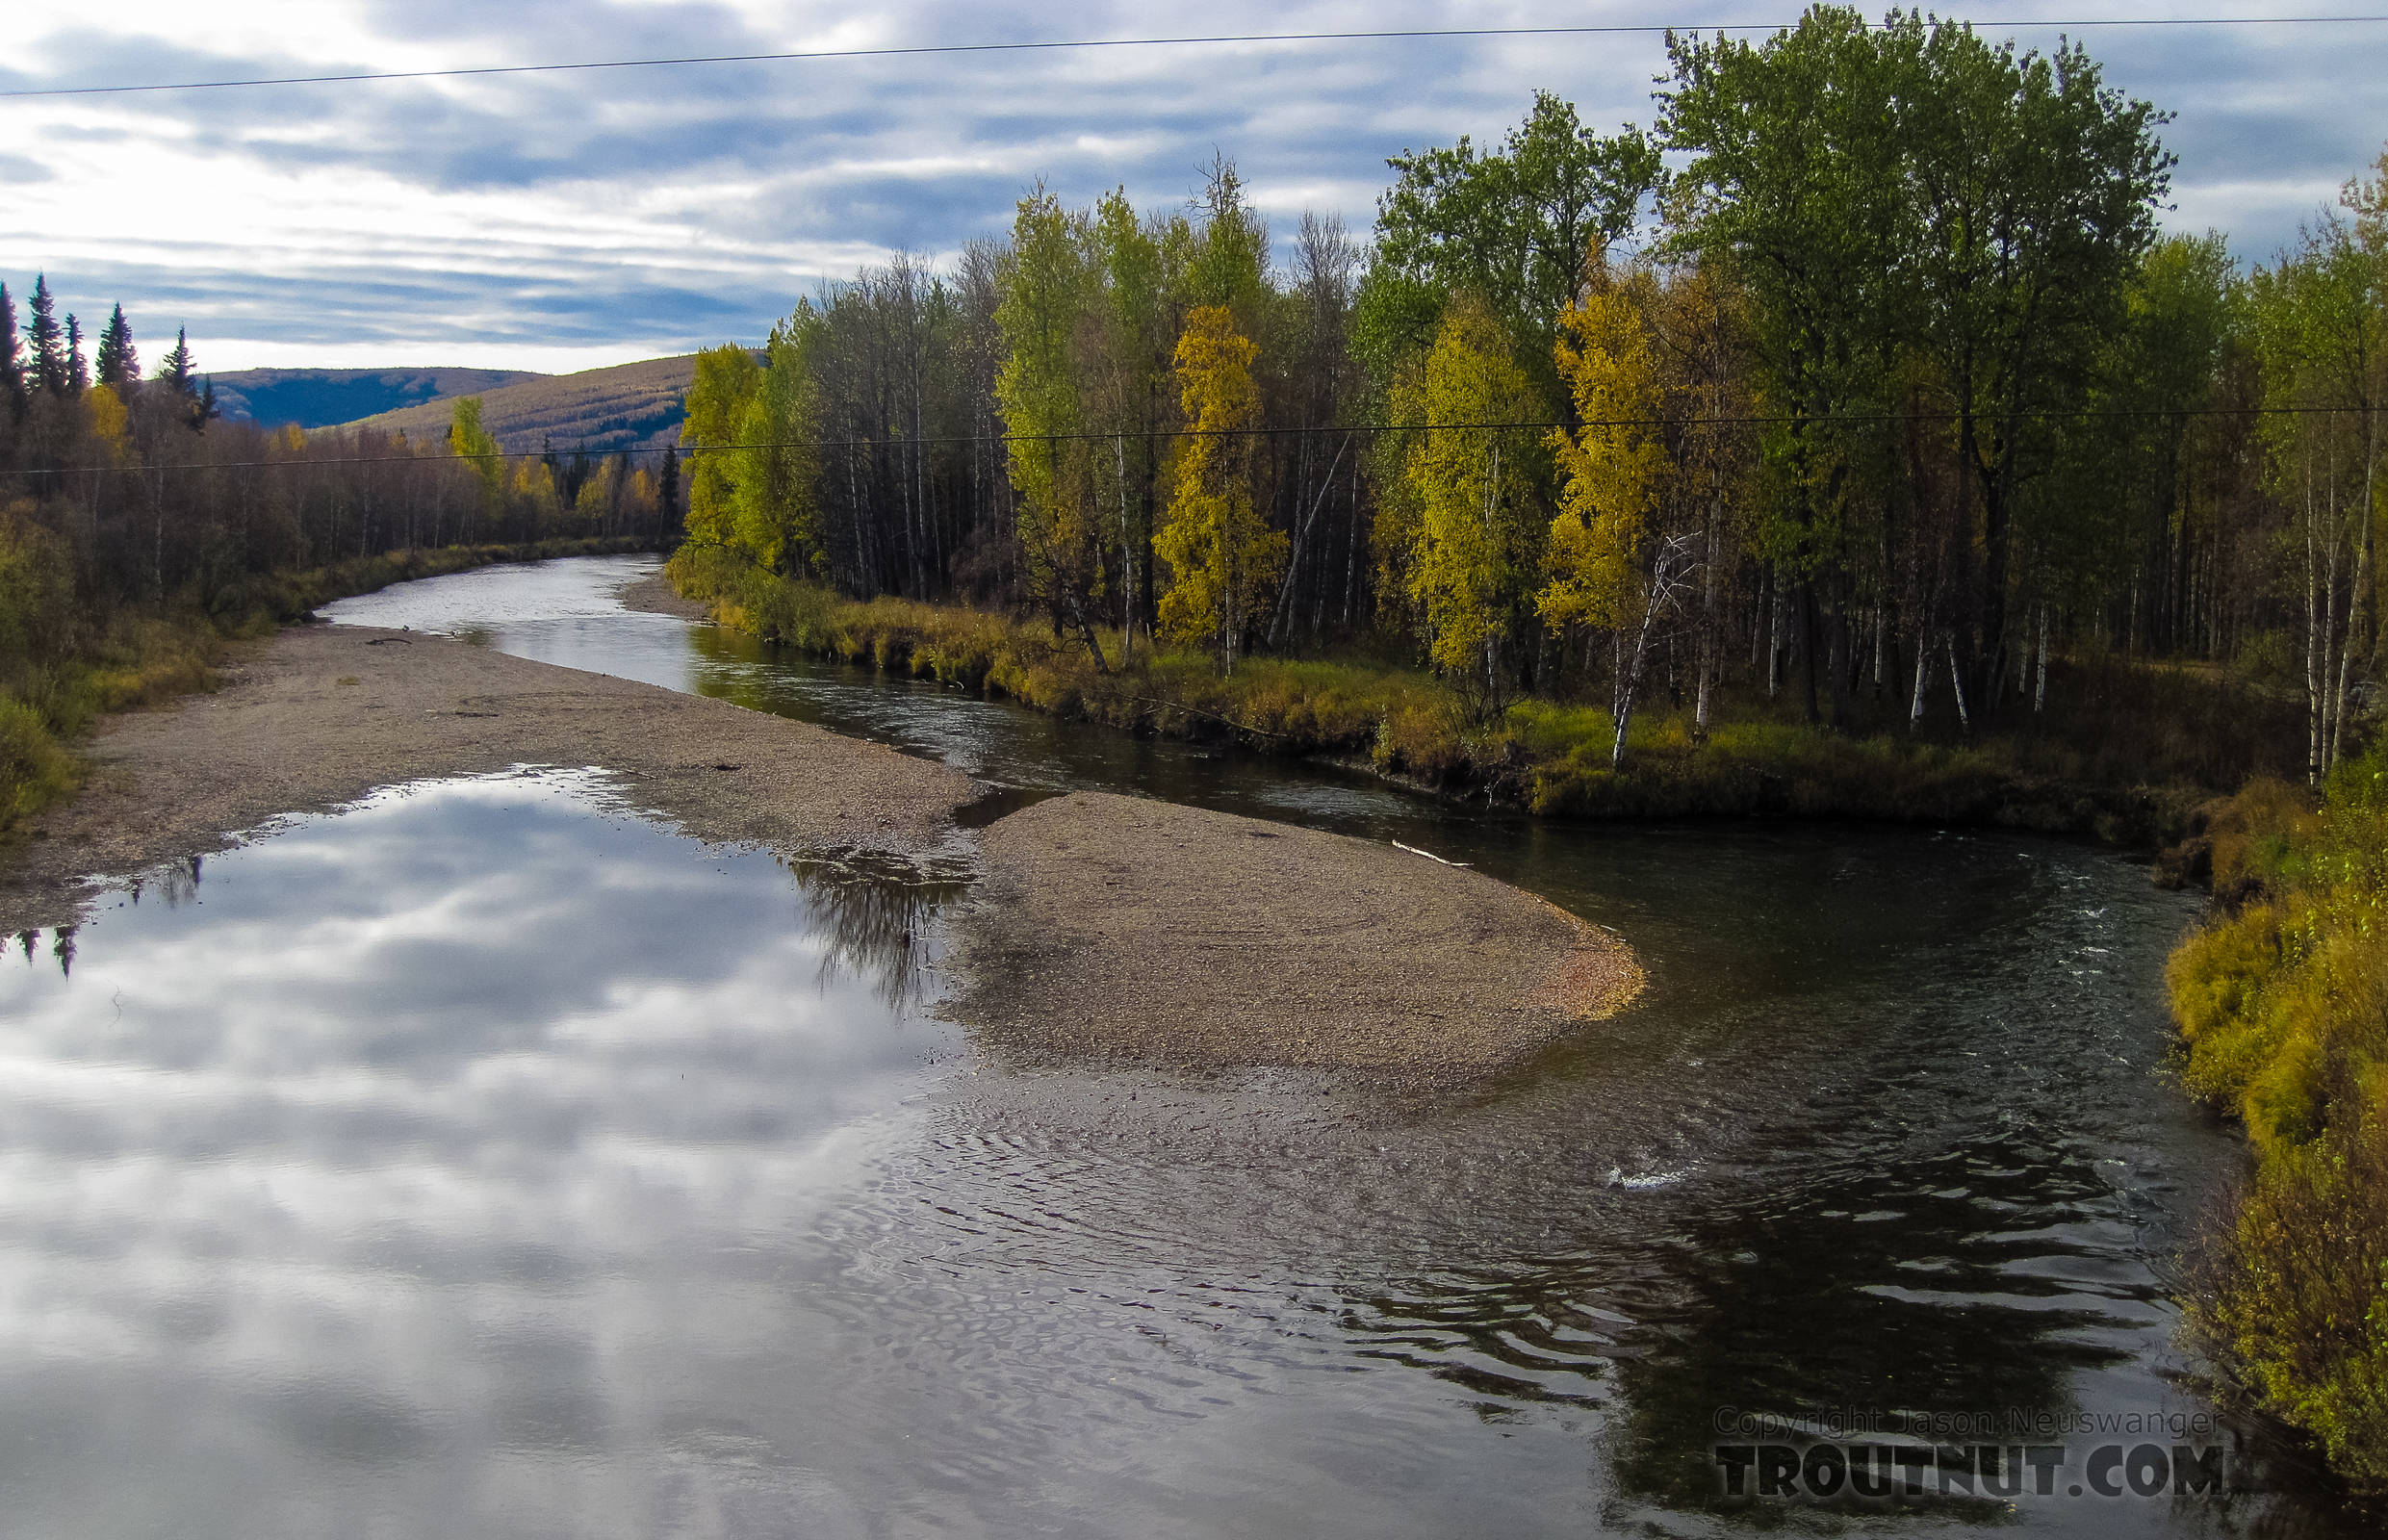 View downstream from Elliott Highway bridge From the Chatanika River in Alaska.